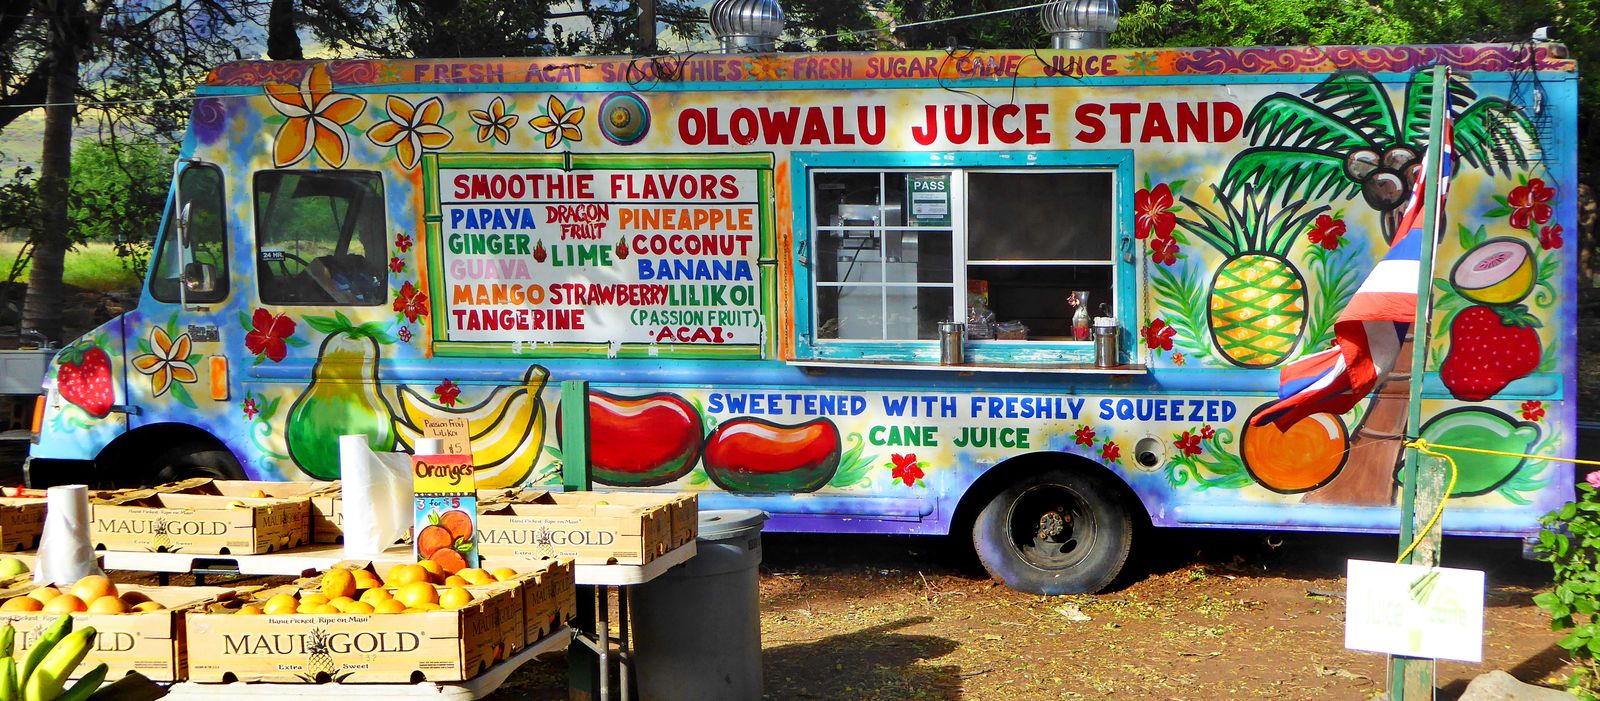 Olawalu Fruit Stand